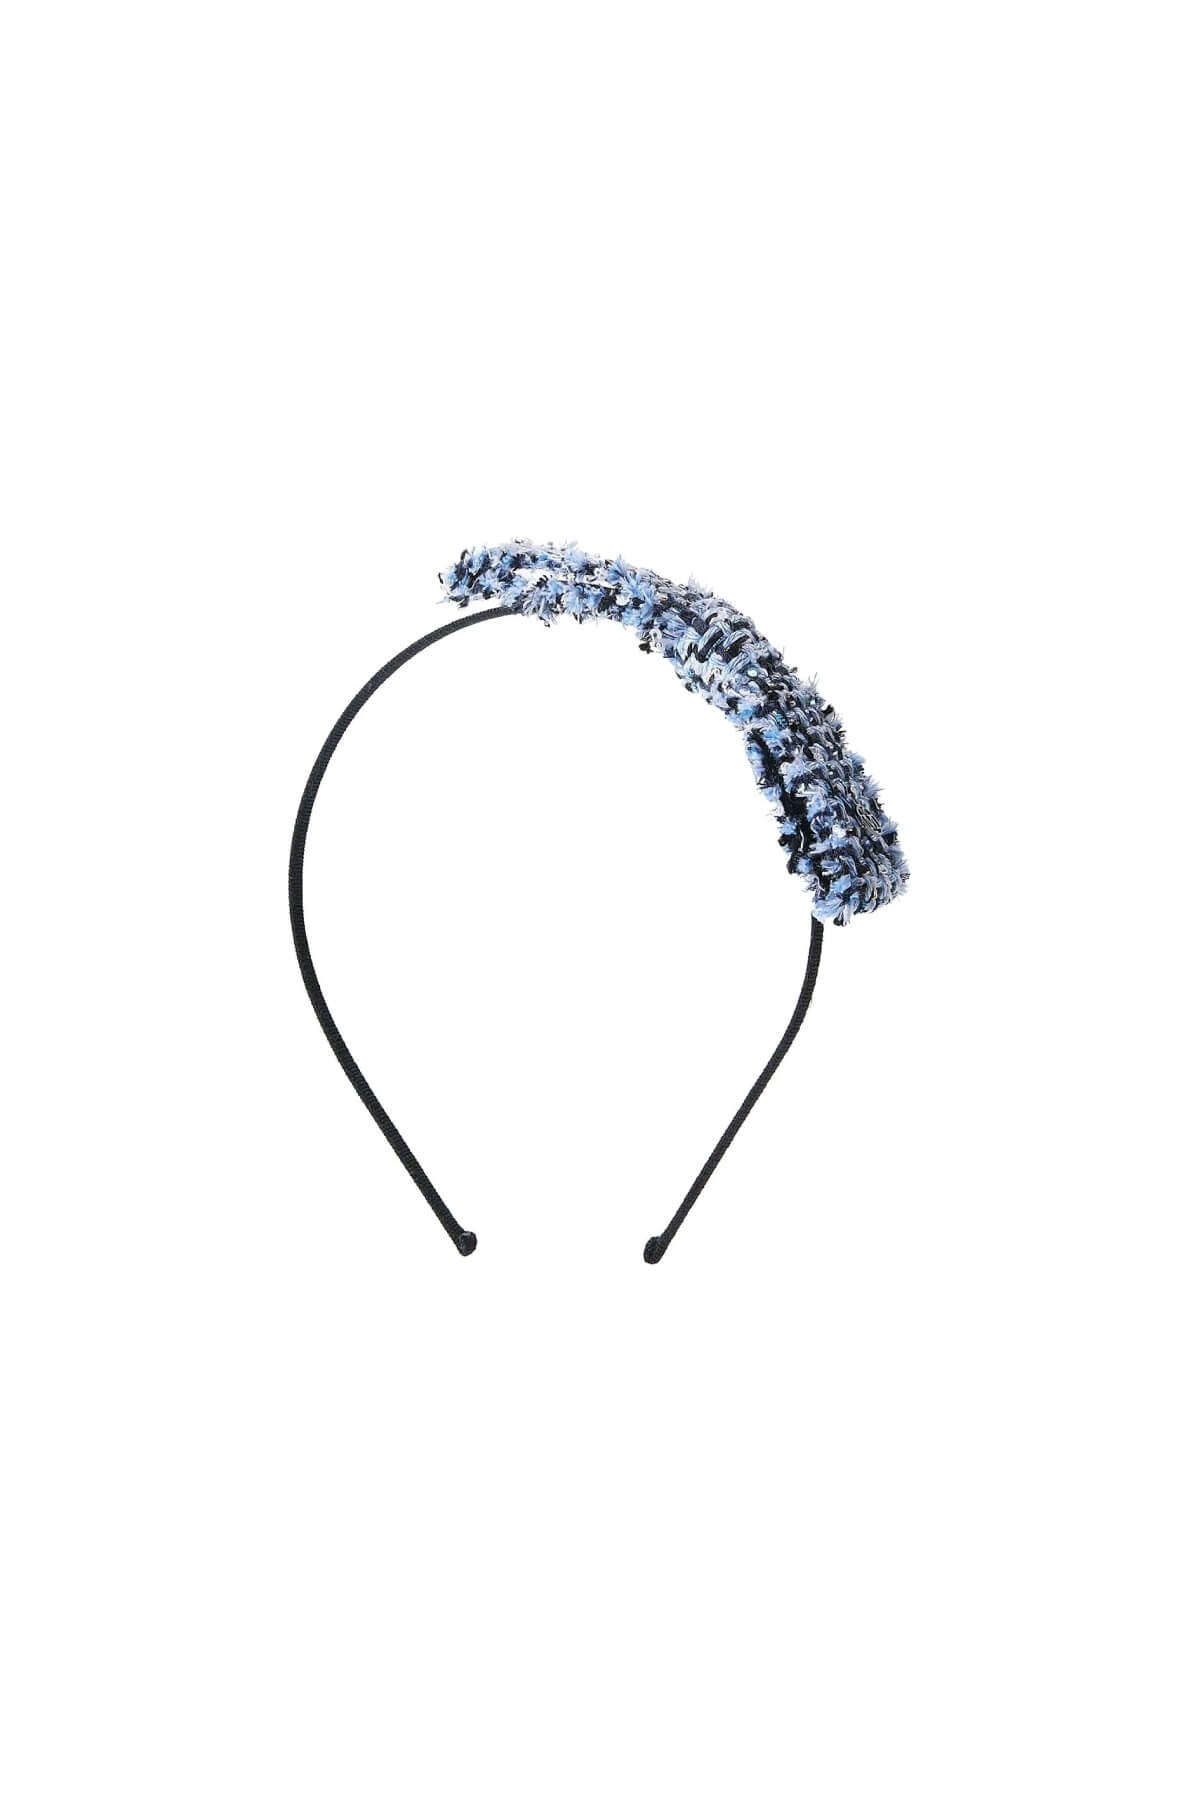 Maison Michel Kylie Tweed Bow Headband - Shiny Blue